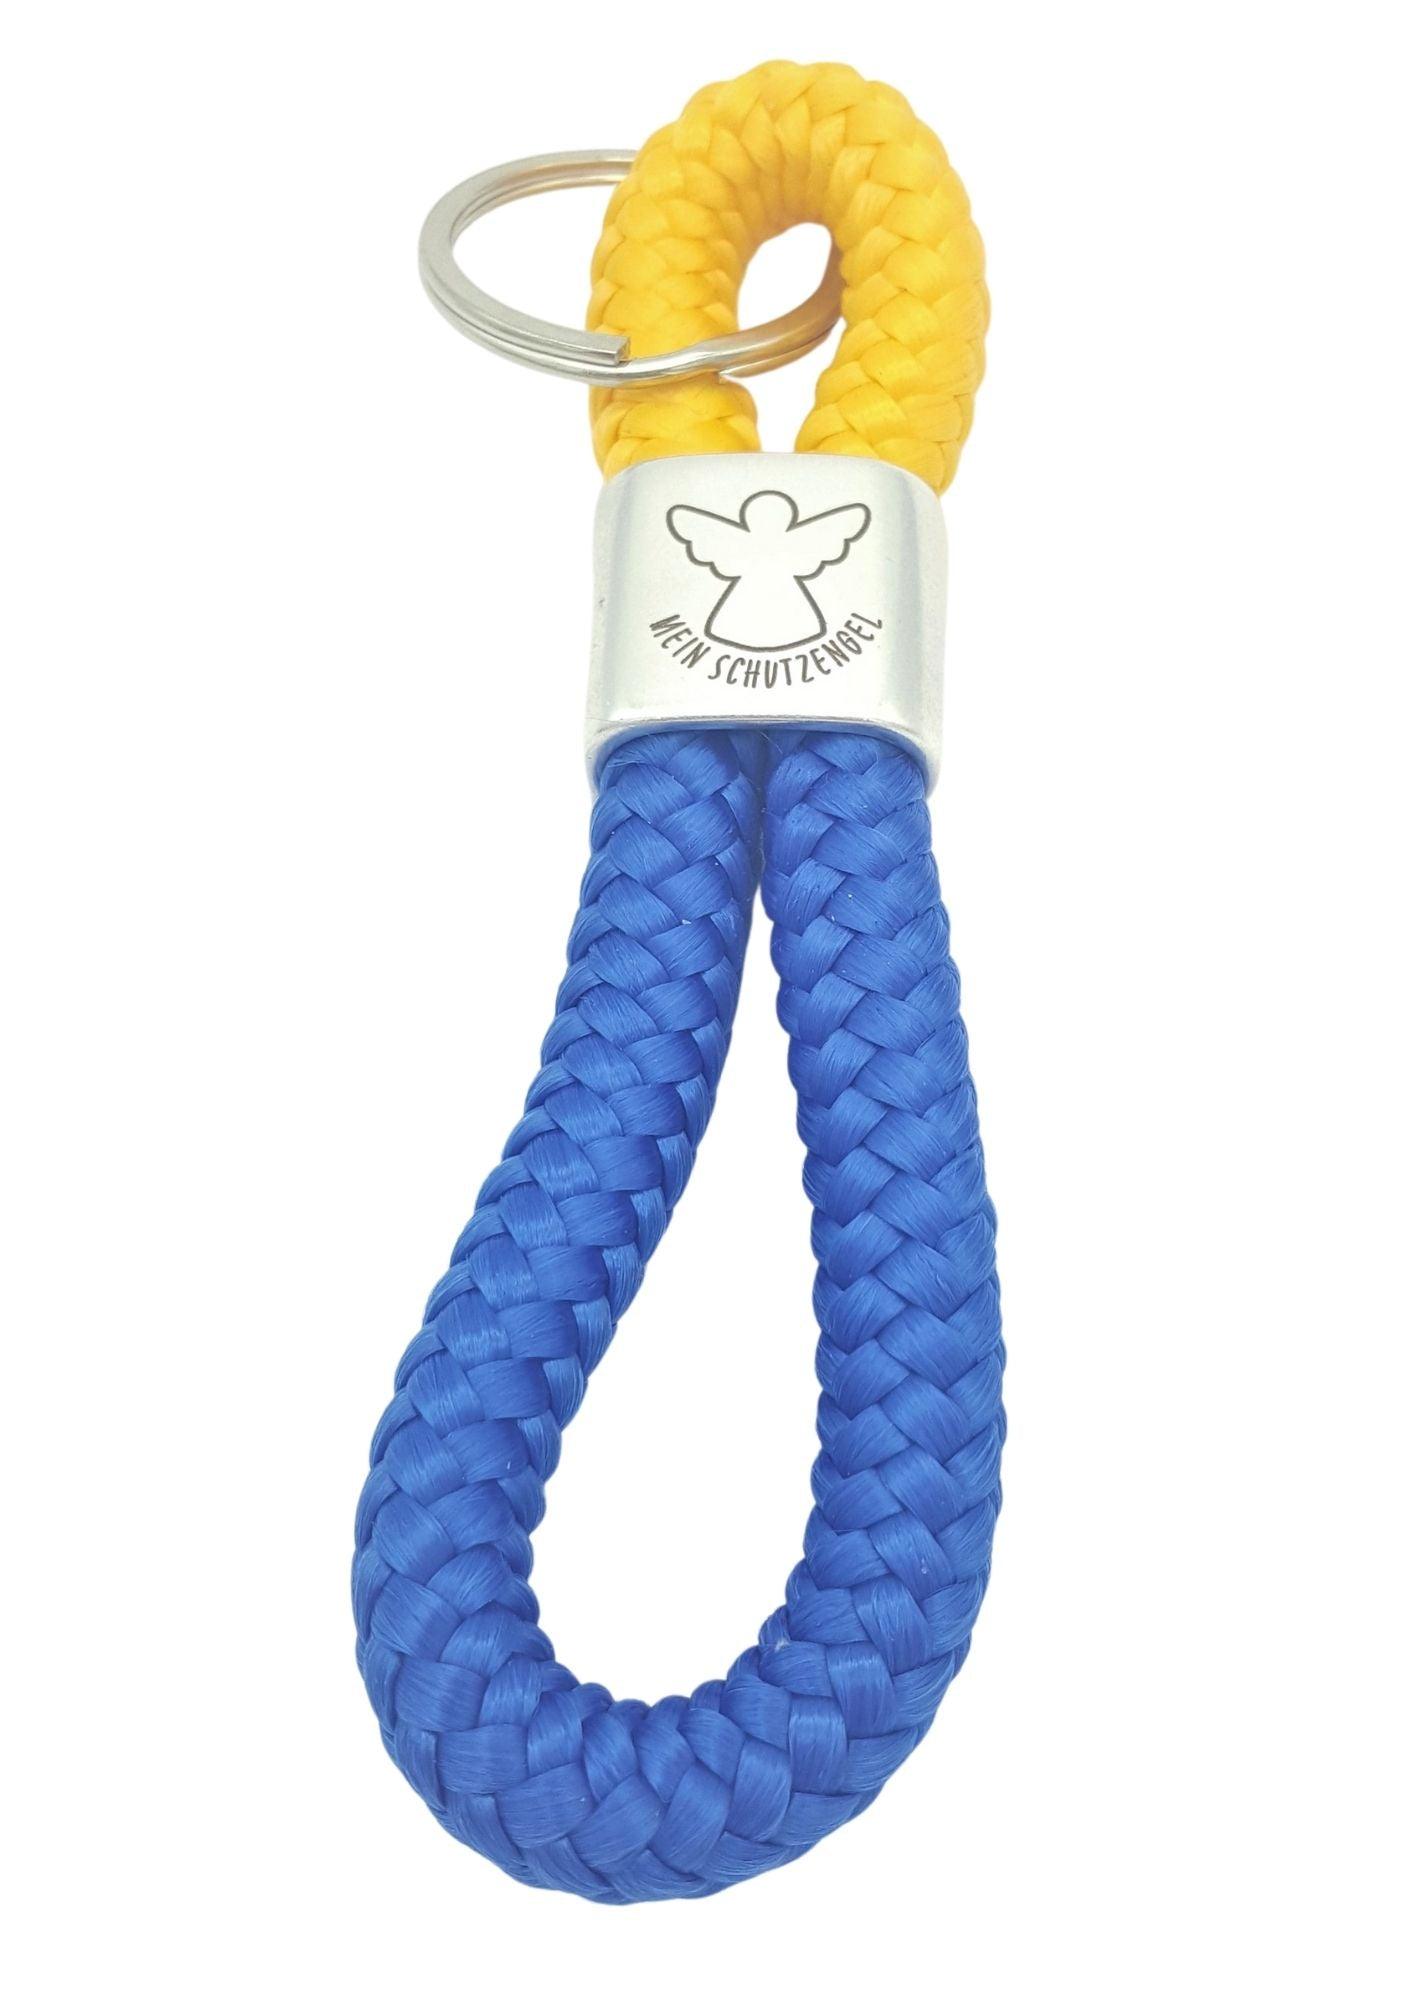 [perleperle] - Segelseil Schlüsselanhänger, gelb / blau, "Schutzengel" #Ukraine - Schlüsselanhänger - [handgefertigter Modeschmuck]